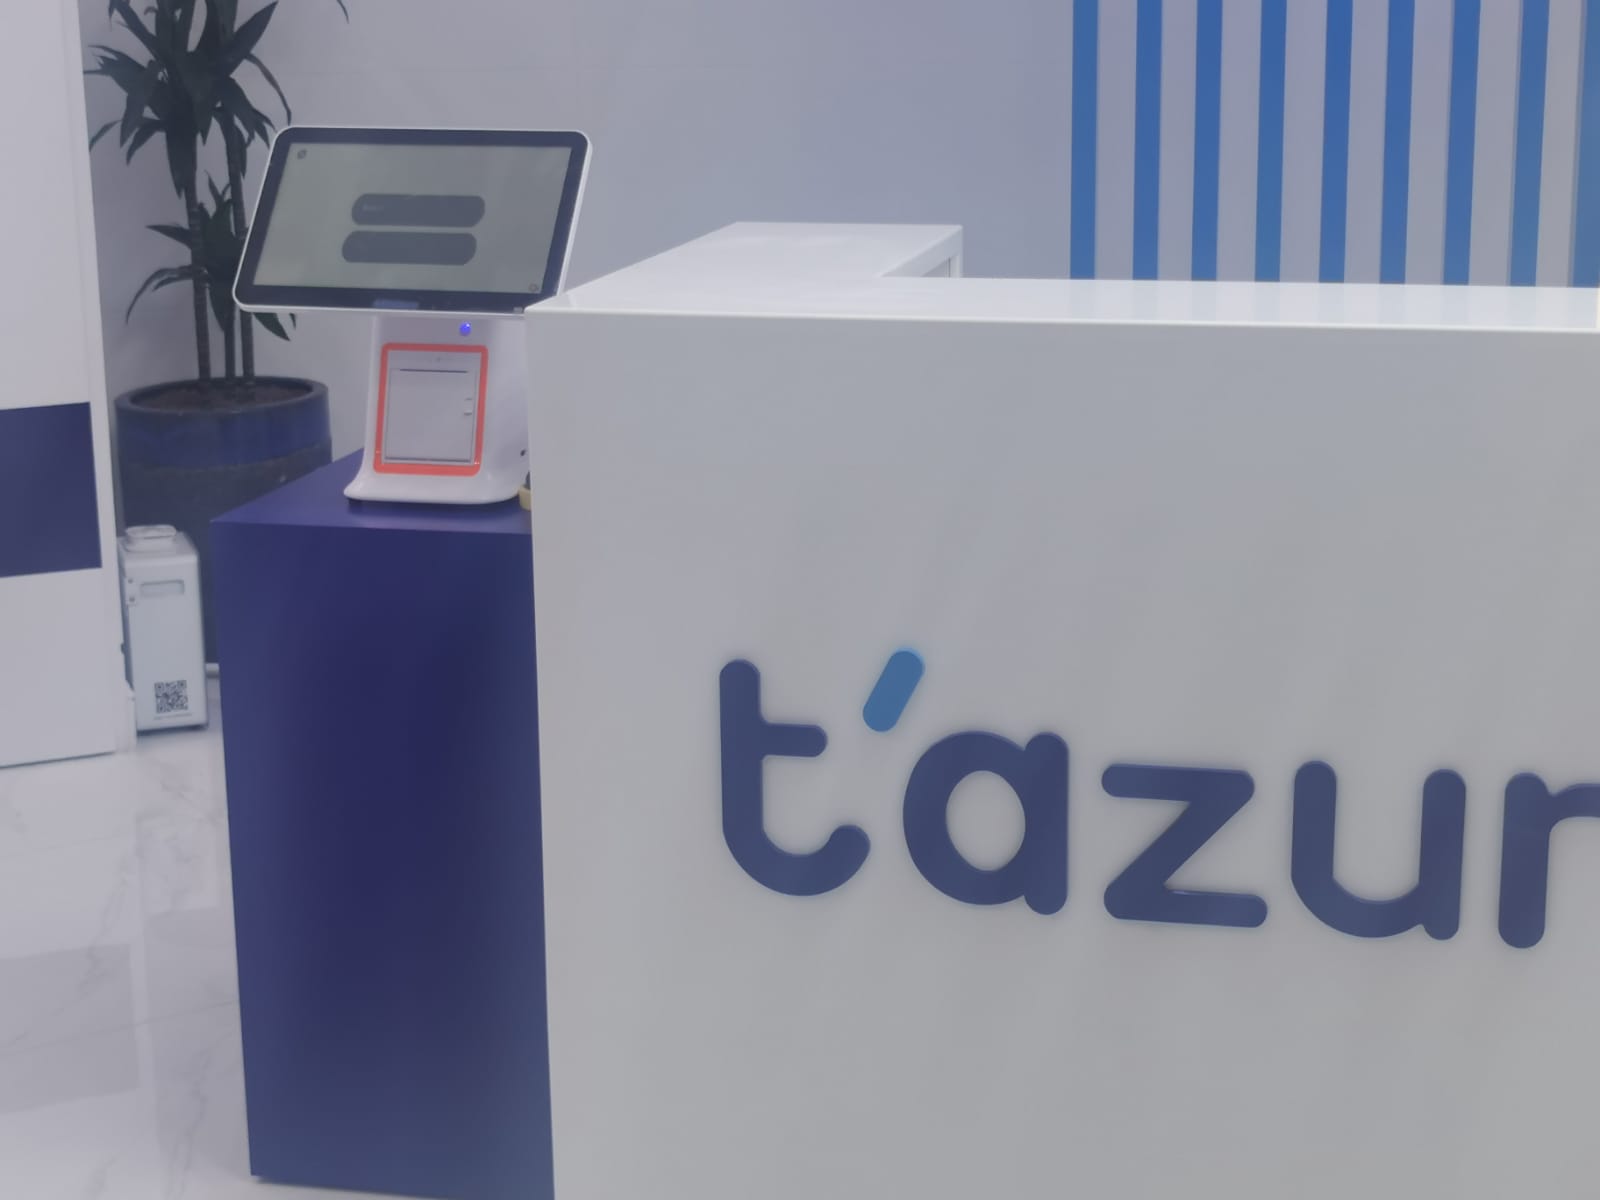 T'azur Takaful Insurance Co., KUWAIT